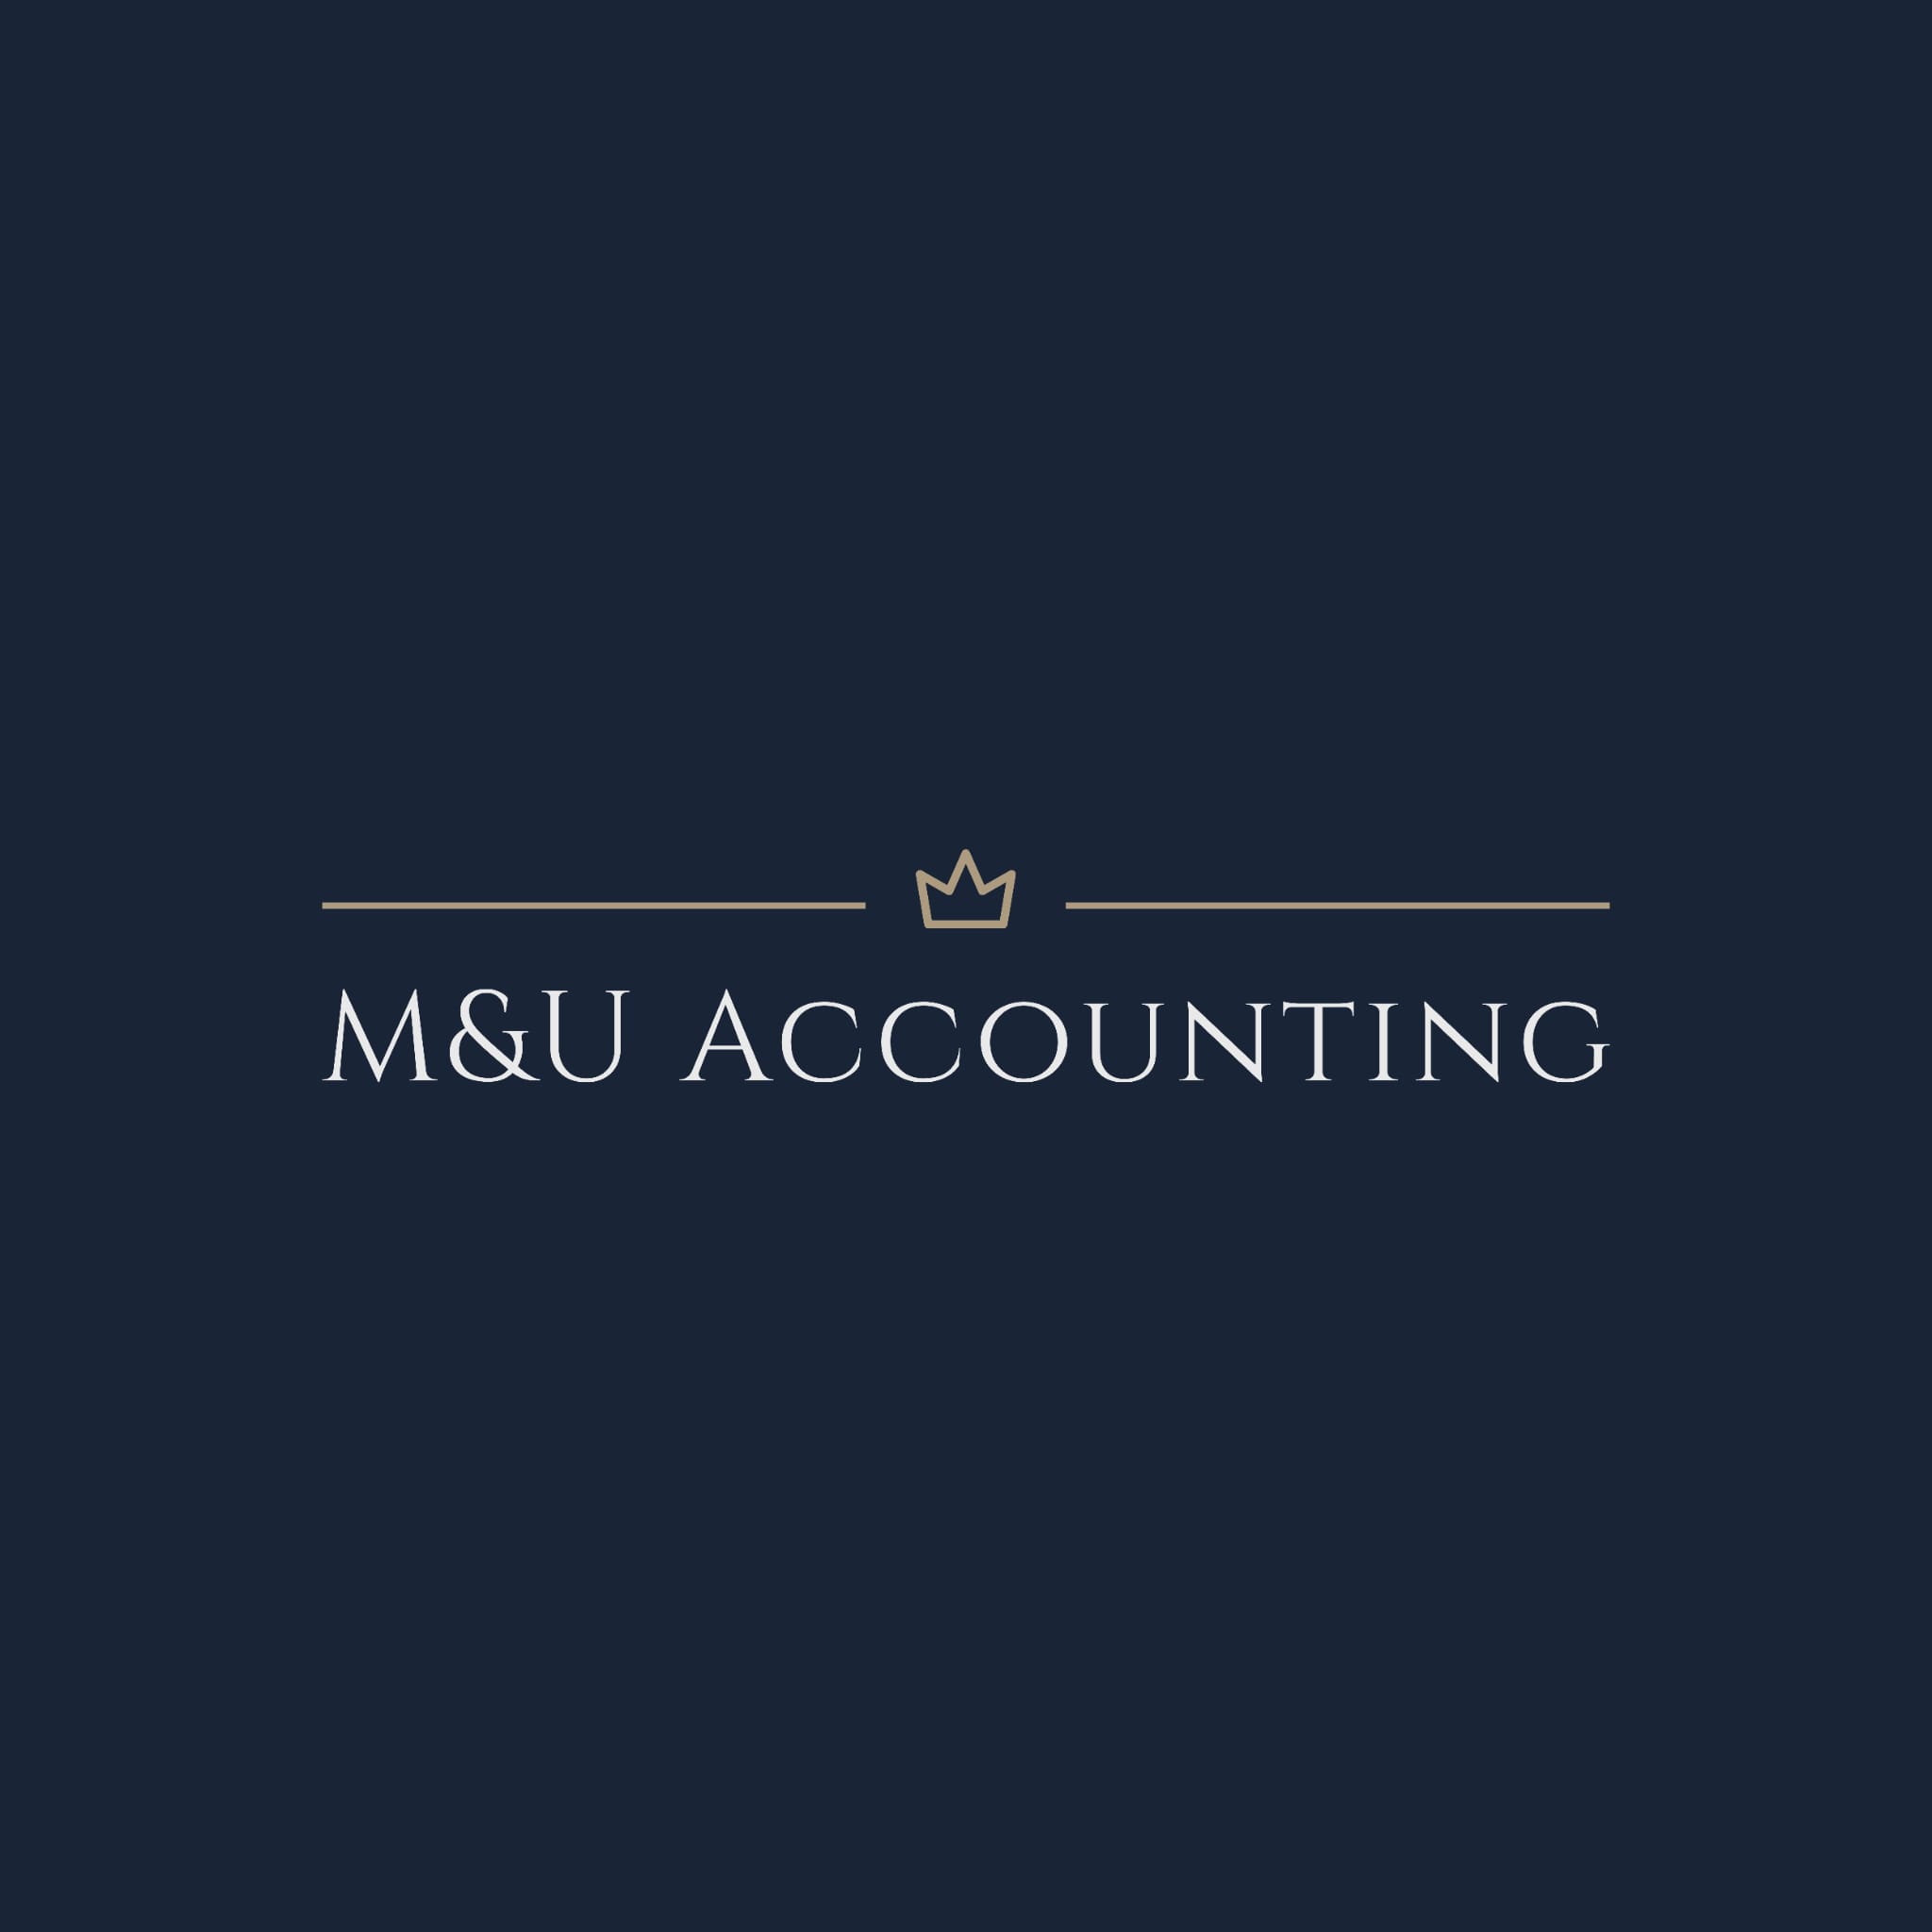 M&U Accounting Logo